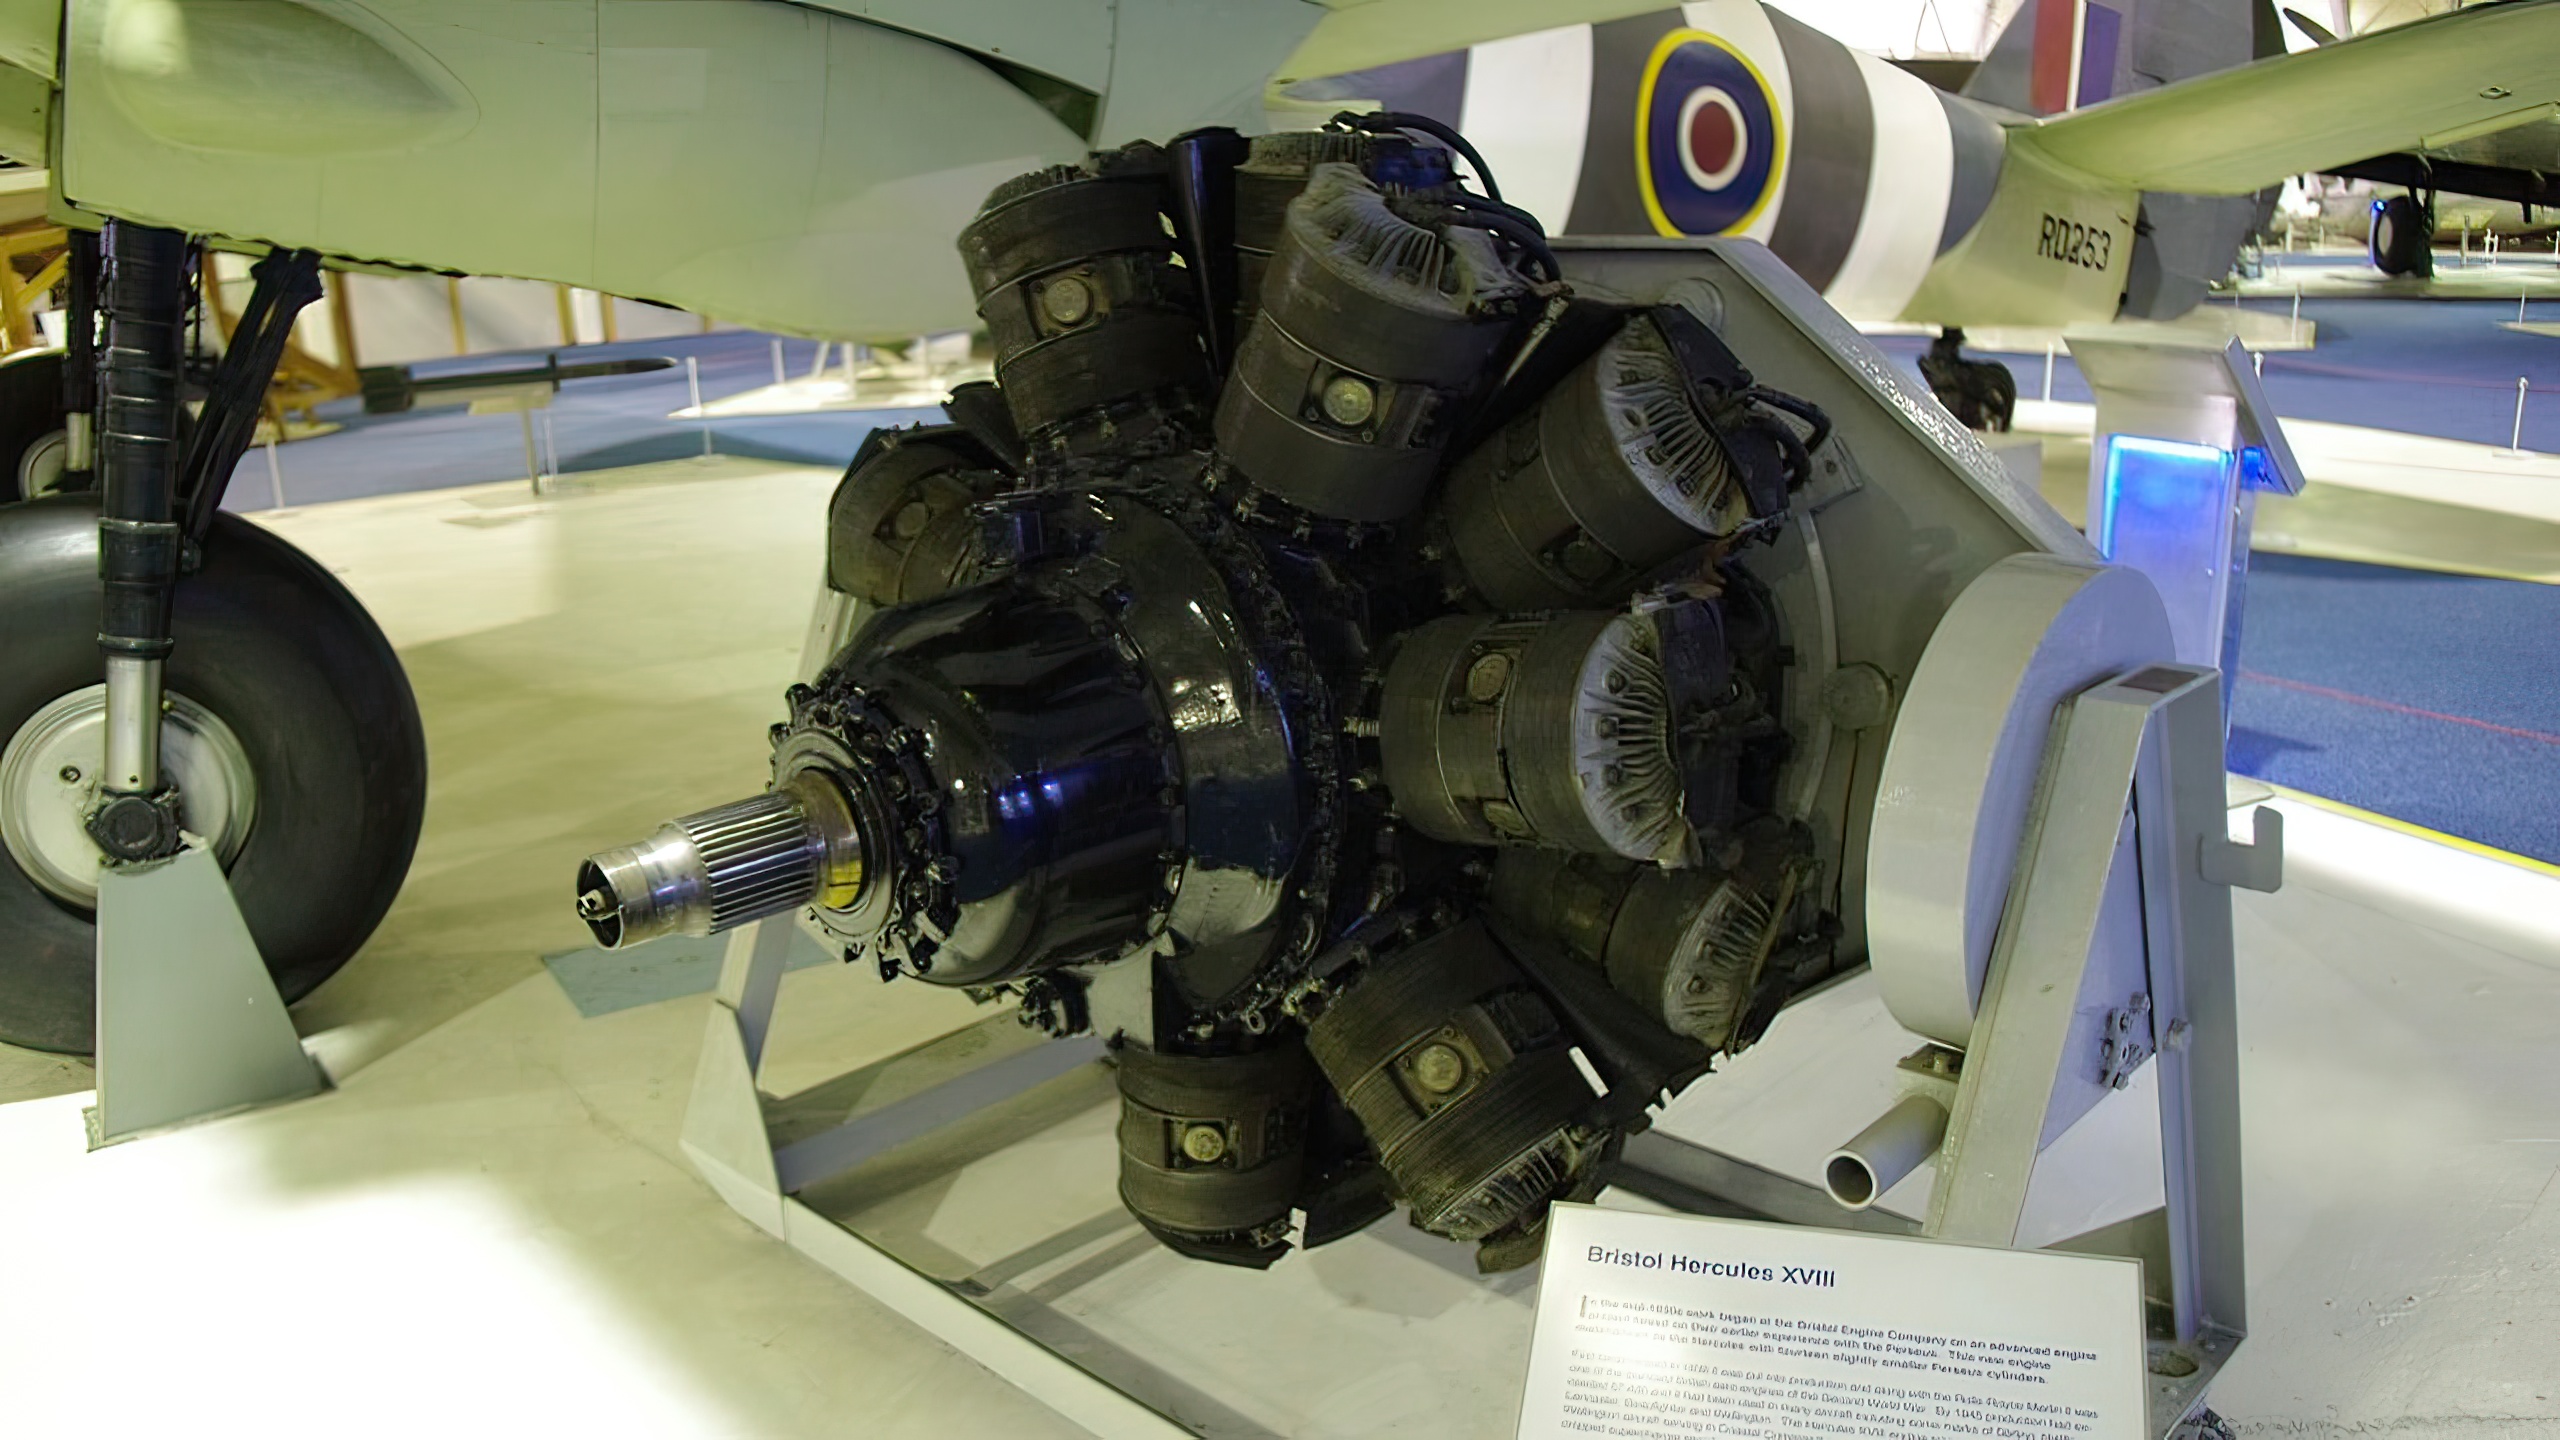 Bristol Hercules XVIII engine, at the Royal Air Force Museum London